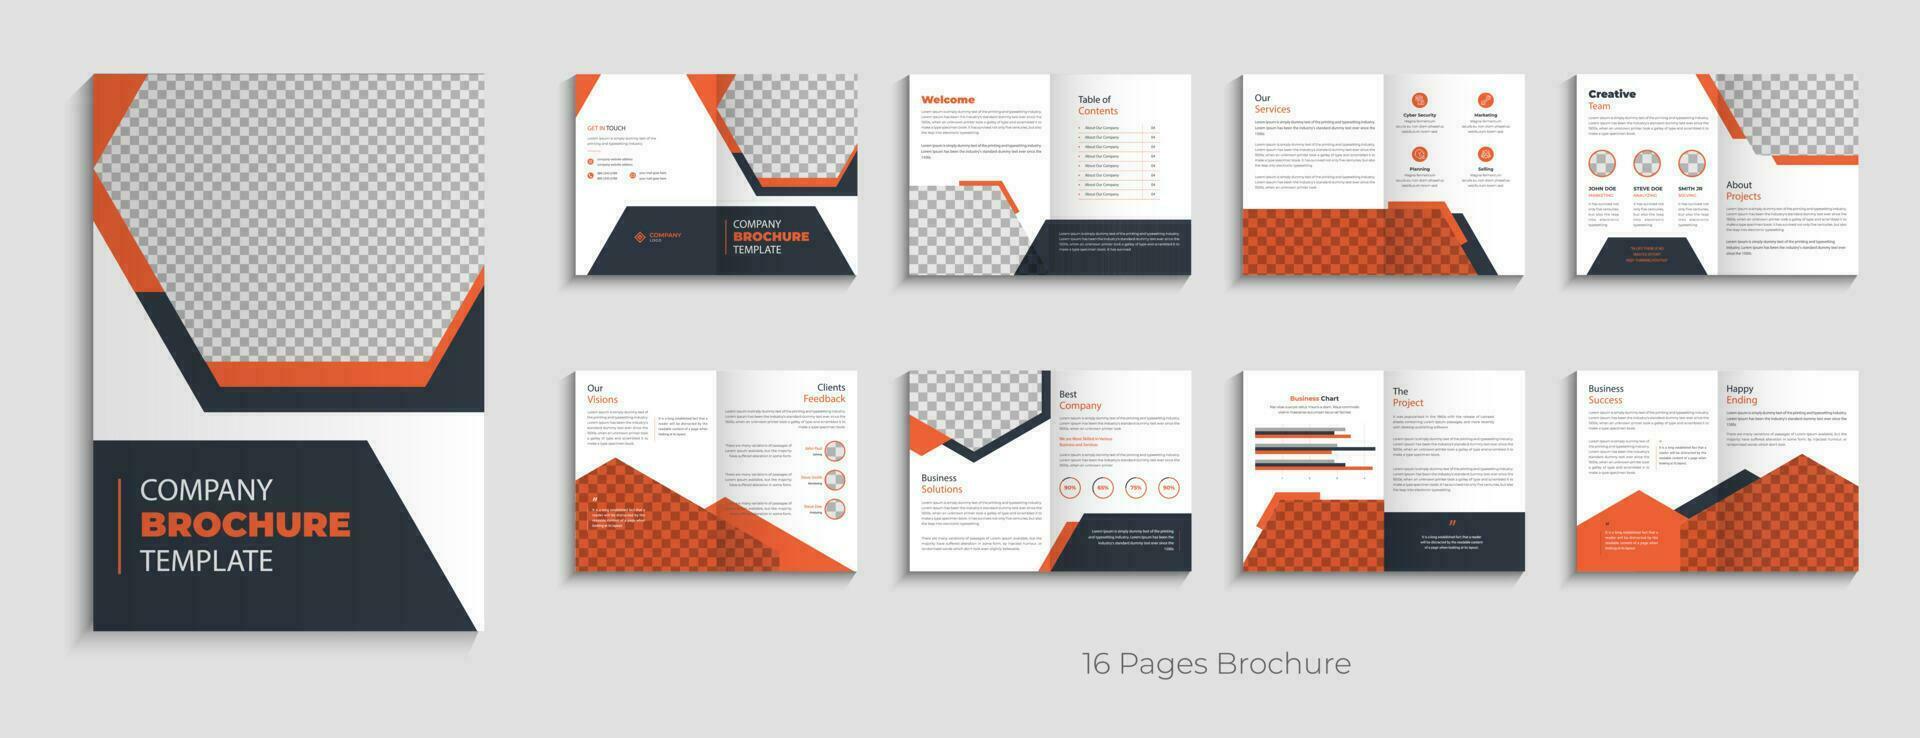 kreativ korporativ Unternehmen Profil Broschüre Vorlage Design Layout vektor